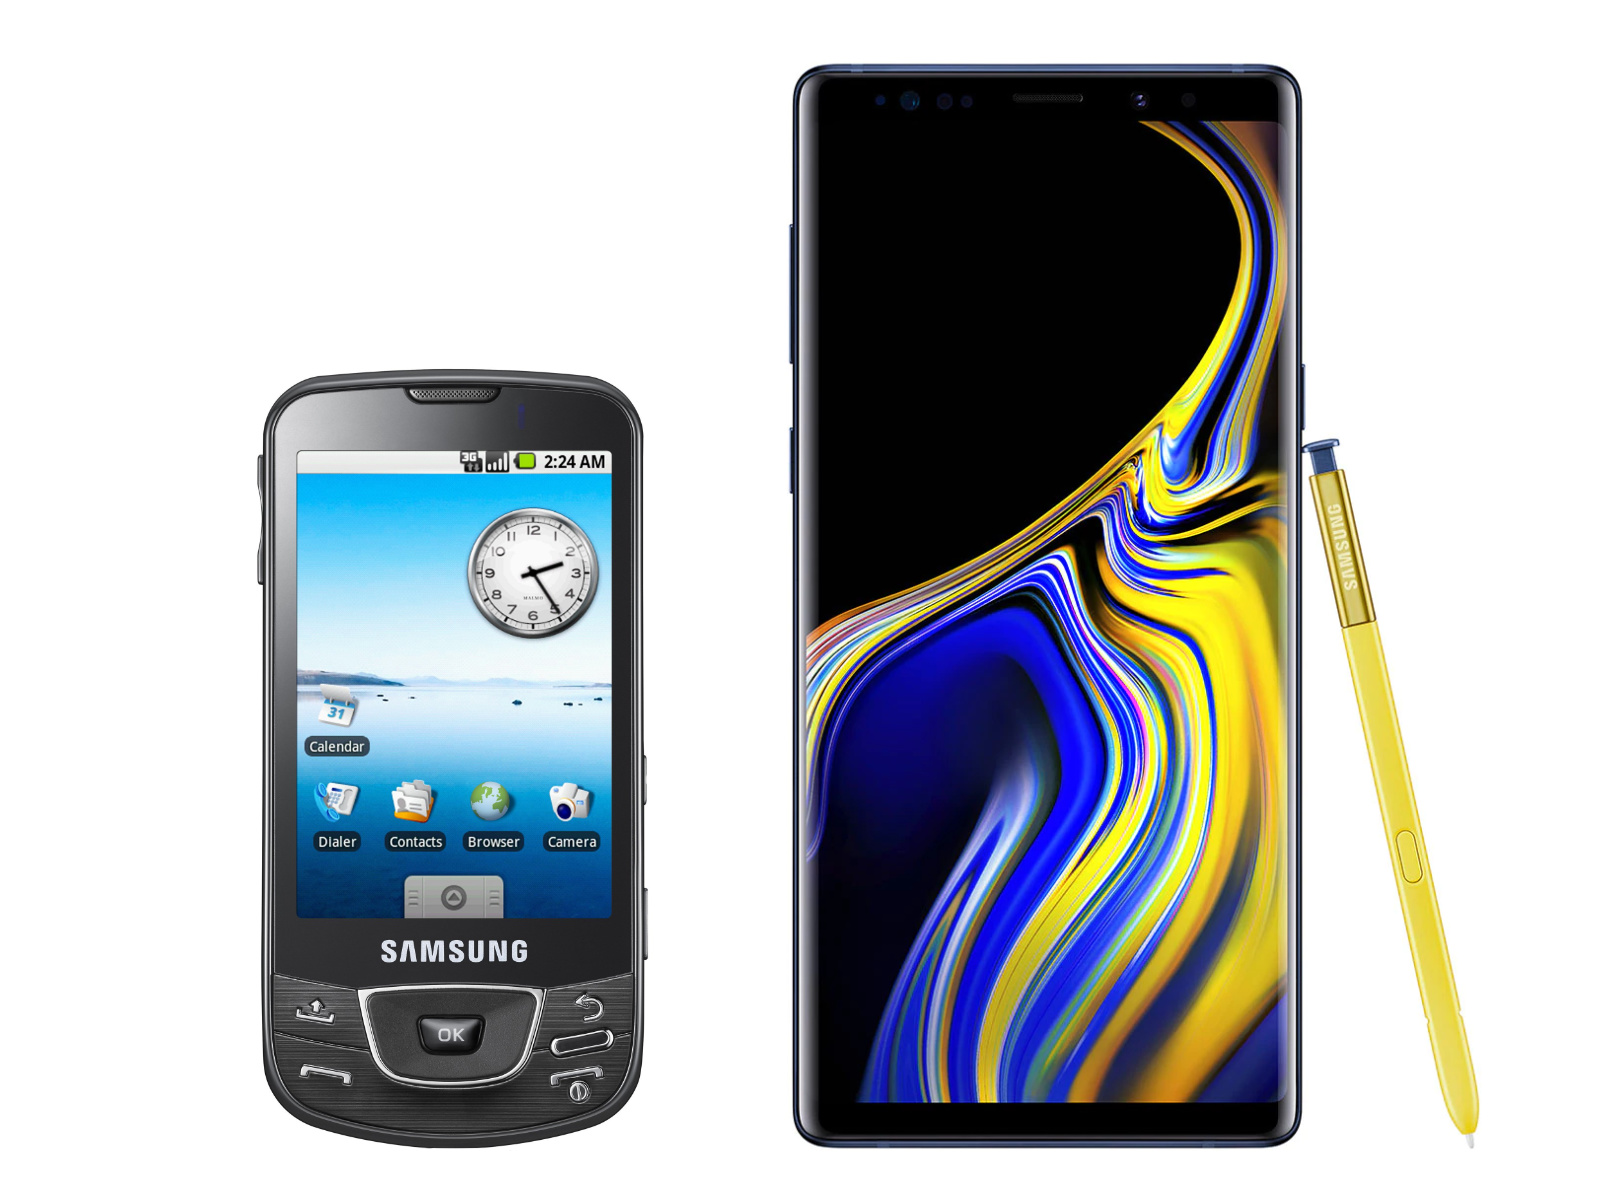 Samsung Galaxy I7500 (po lewej), Samsung Galaxy Note 9 (po prawej)